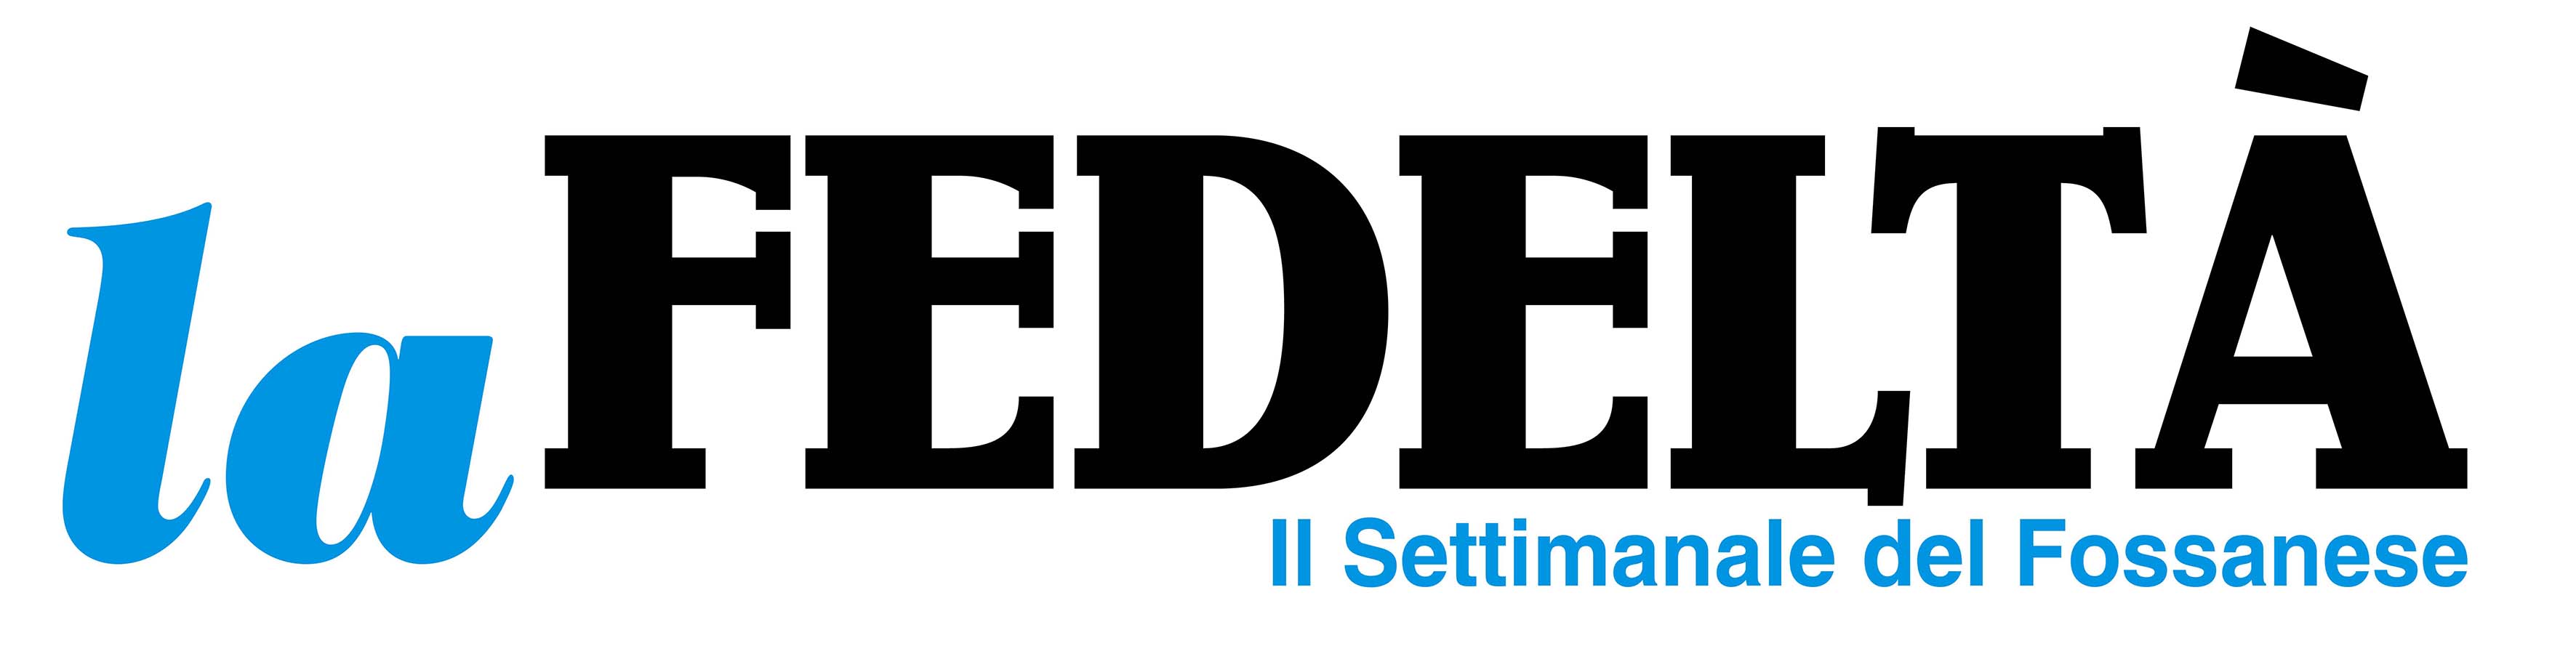 la-fedelta-logo-cai-2014